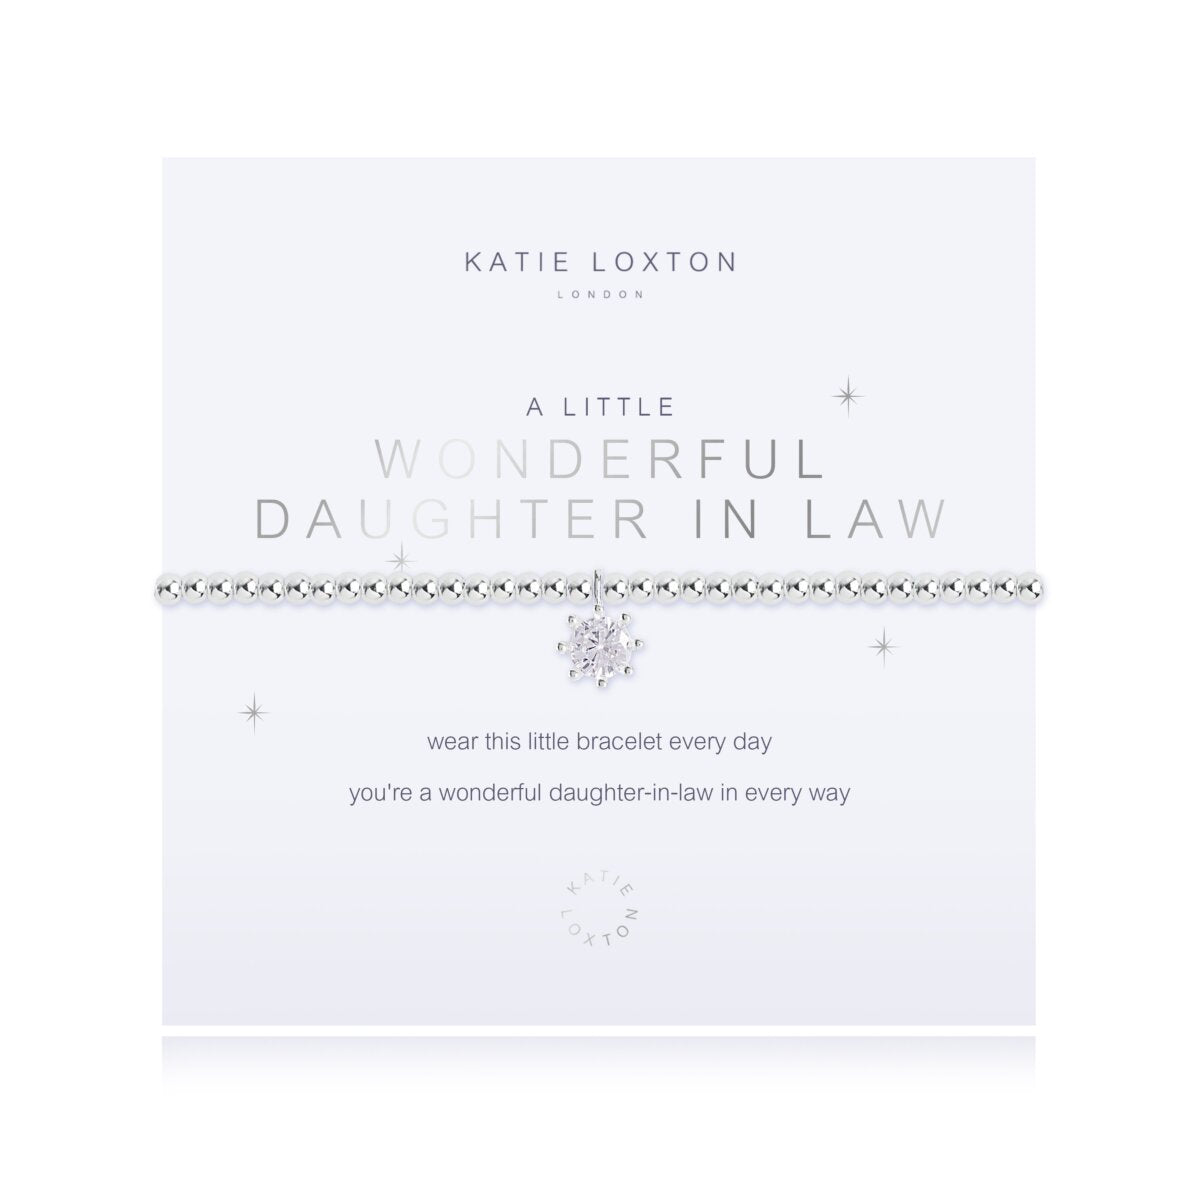 Katie Loxton Wonderful Daughter in Law Bracelet